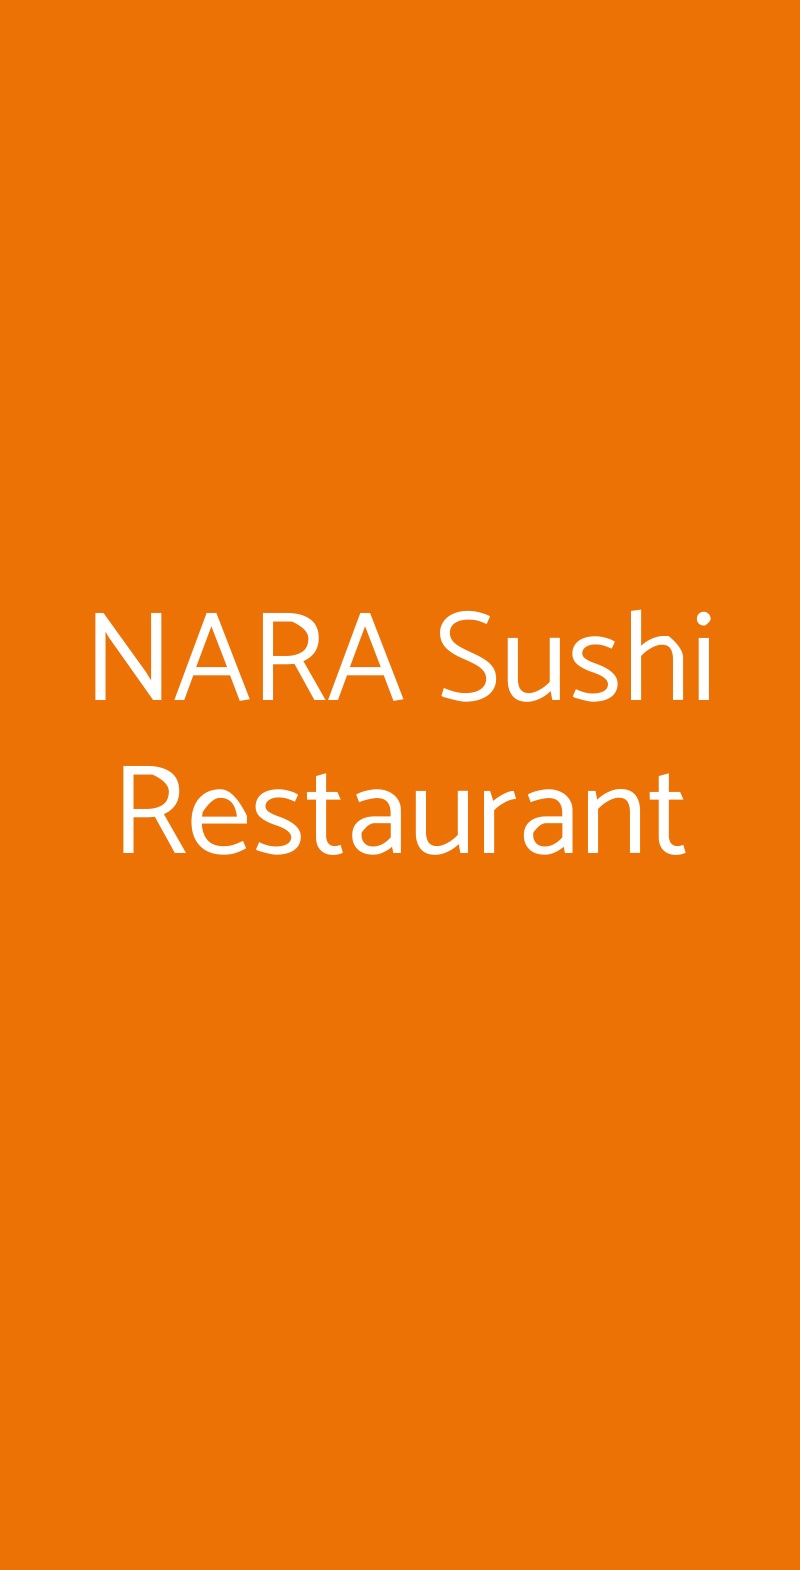 NARA Sushi Restaurant Milano menù 1 pagina